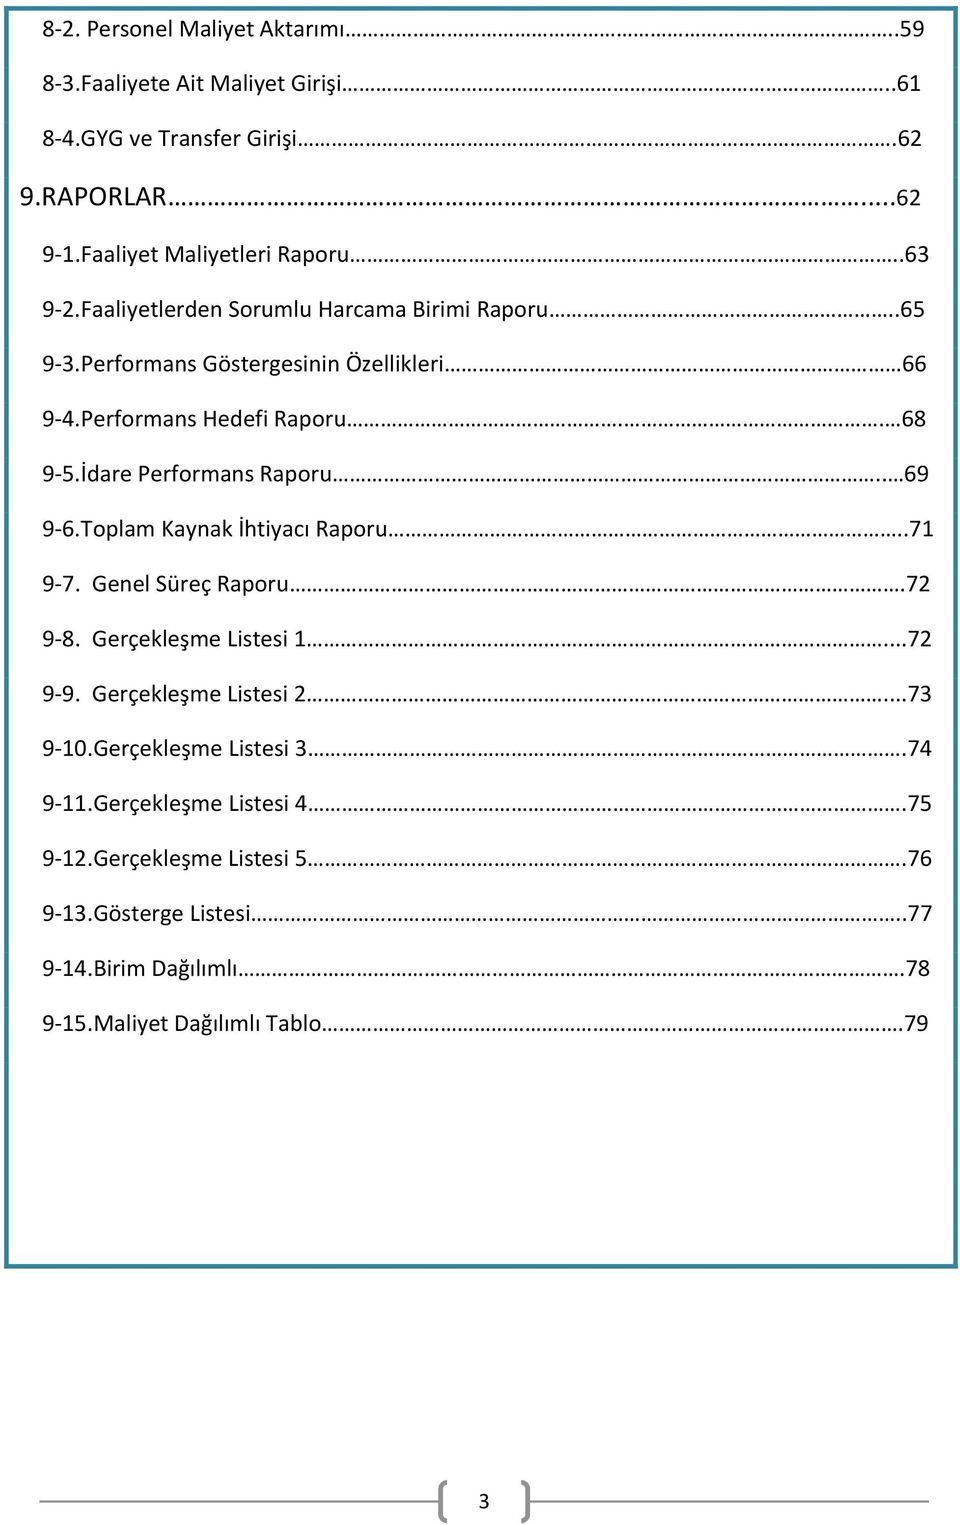 İdare Performans Raporu.. 69 9-6.Toplam Kaynak İhtiyacı Raporu..71 9-7. Genel Süreç Raporu.72 9-8. Gerçekleşme Listesi 1...72 9-9. Gerçekleşme Listesi 2.